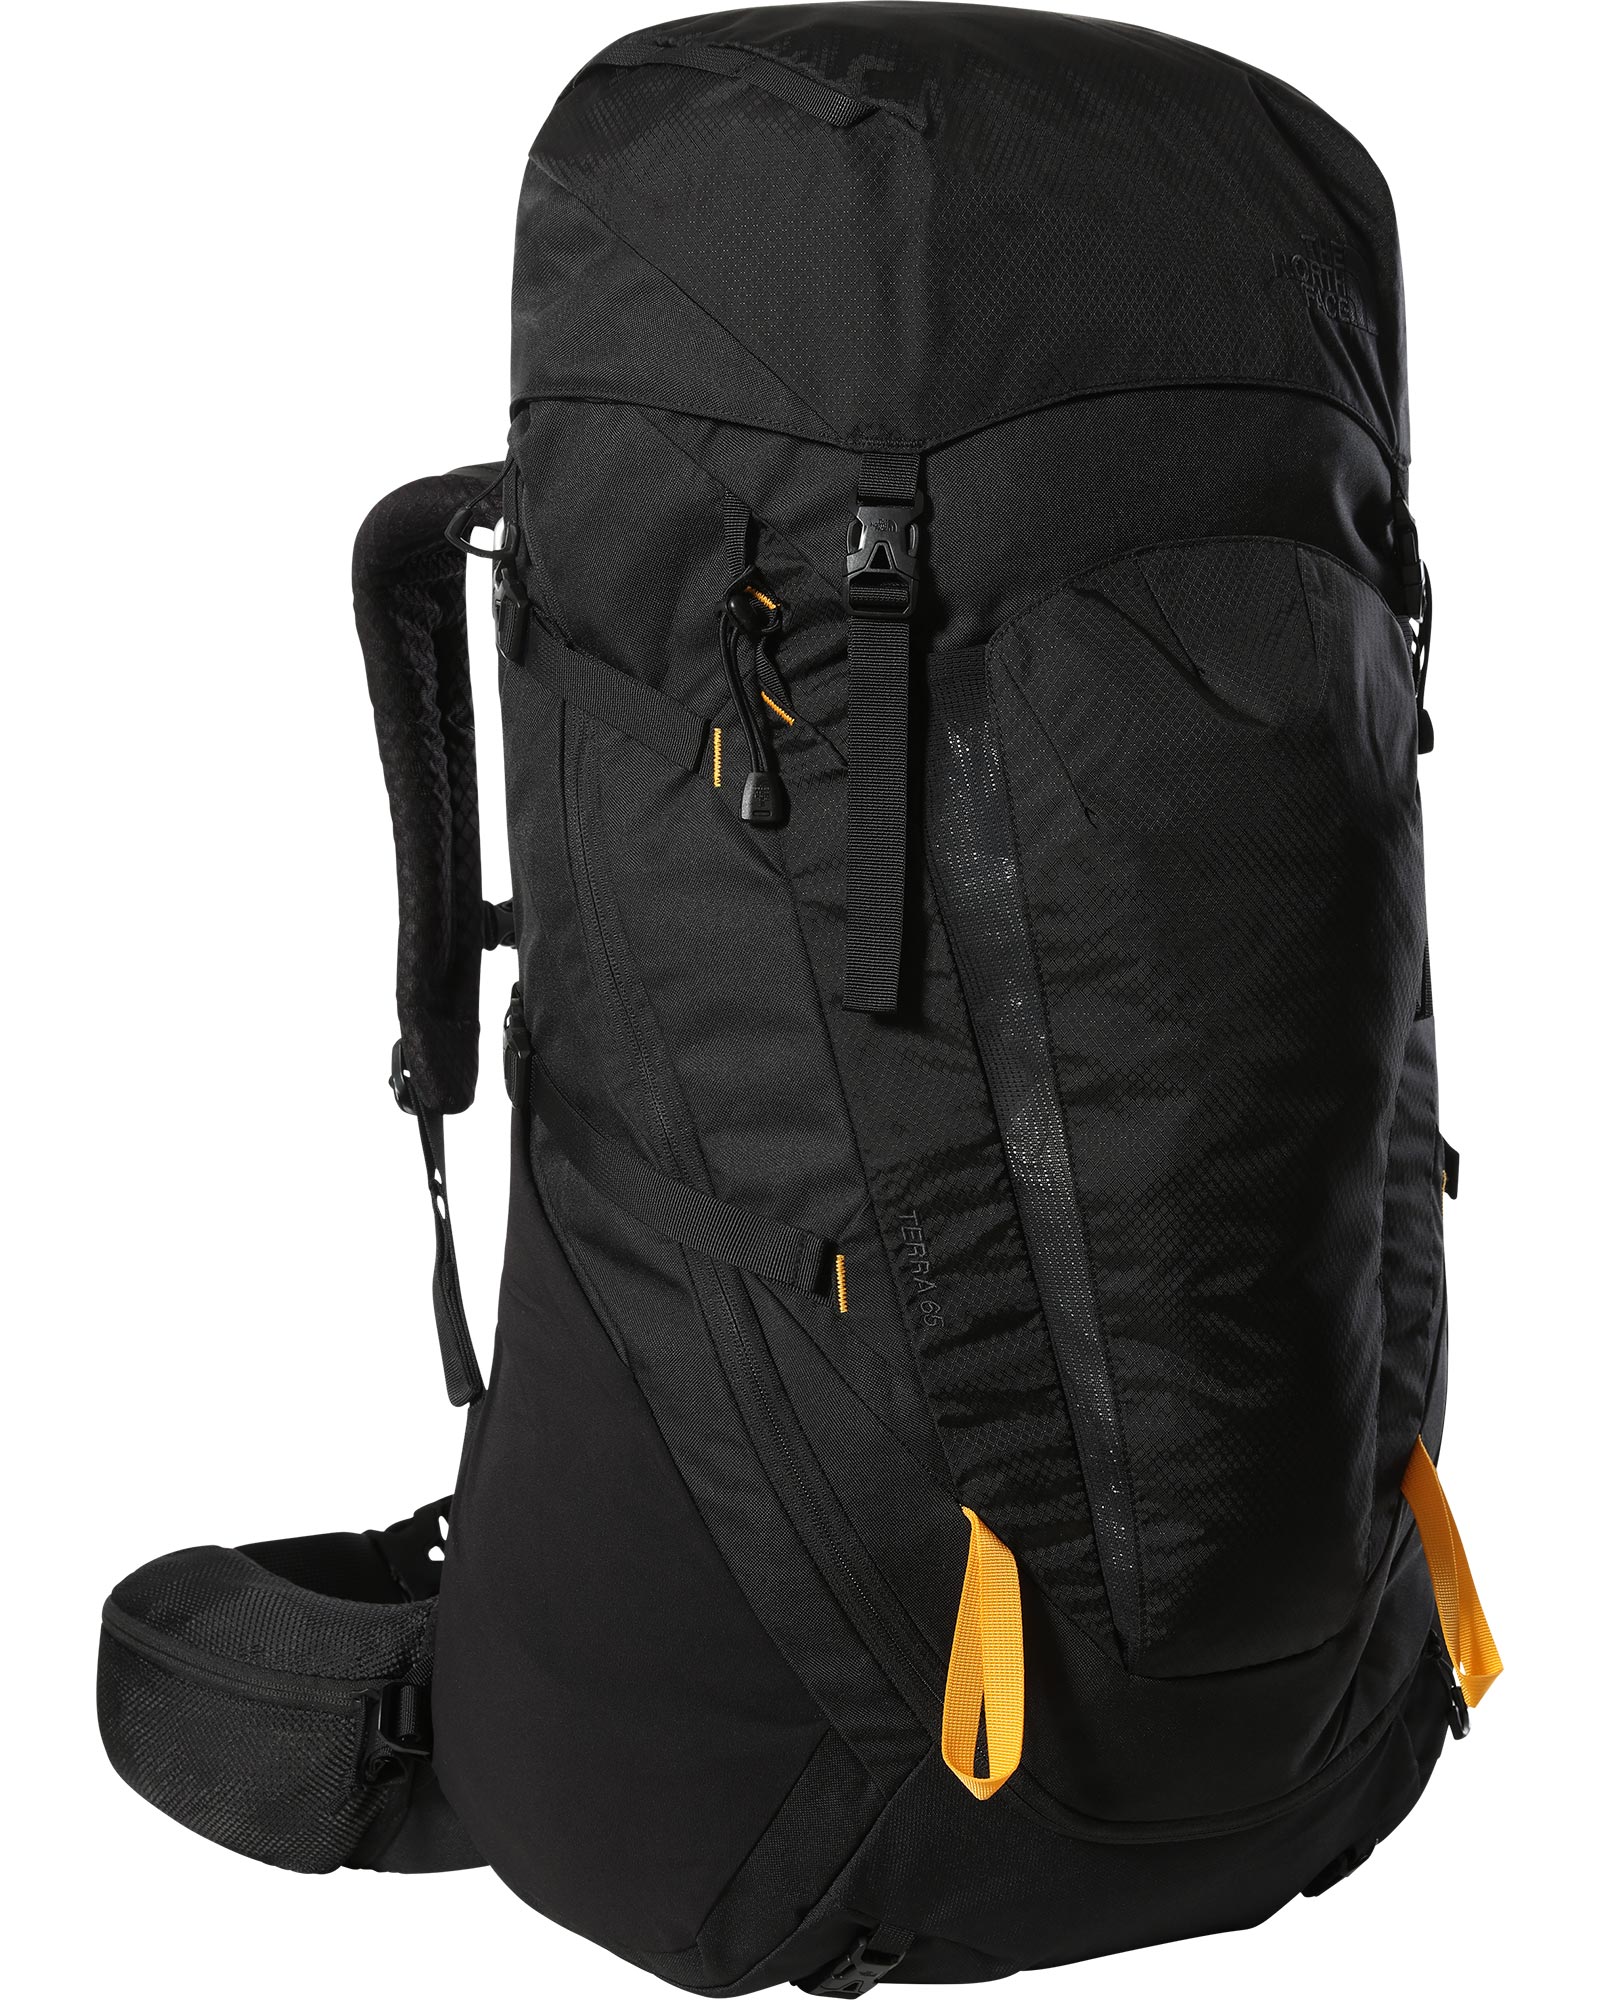 The North Face Terra 65 Backpack - TNF Black/TNF Black L/XL